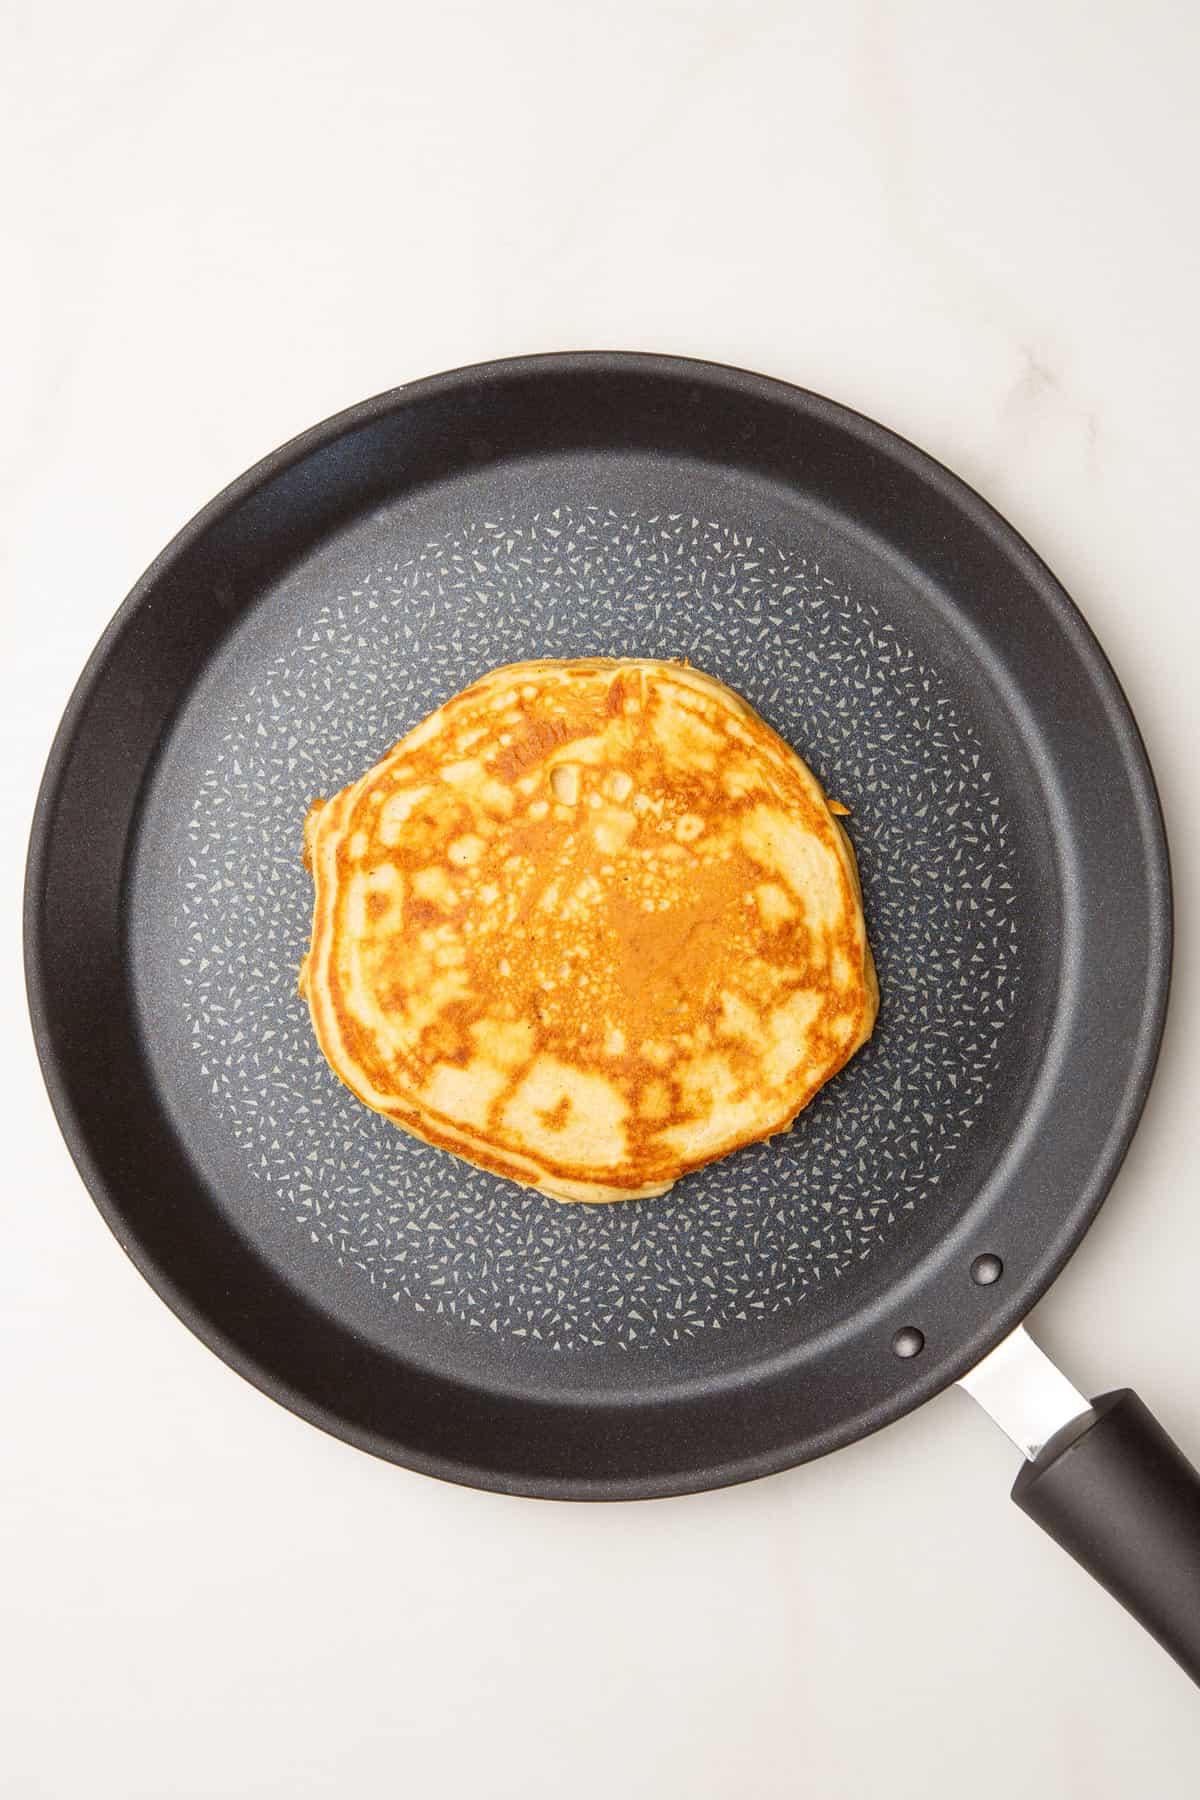 peanut butter pancake in a pan